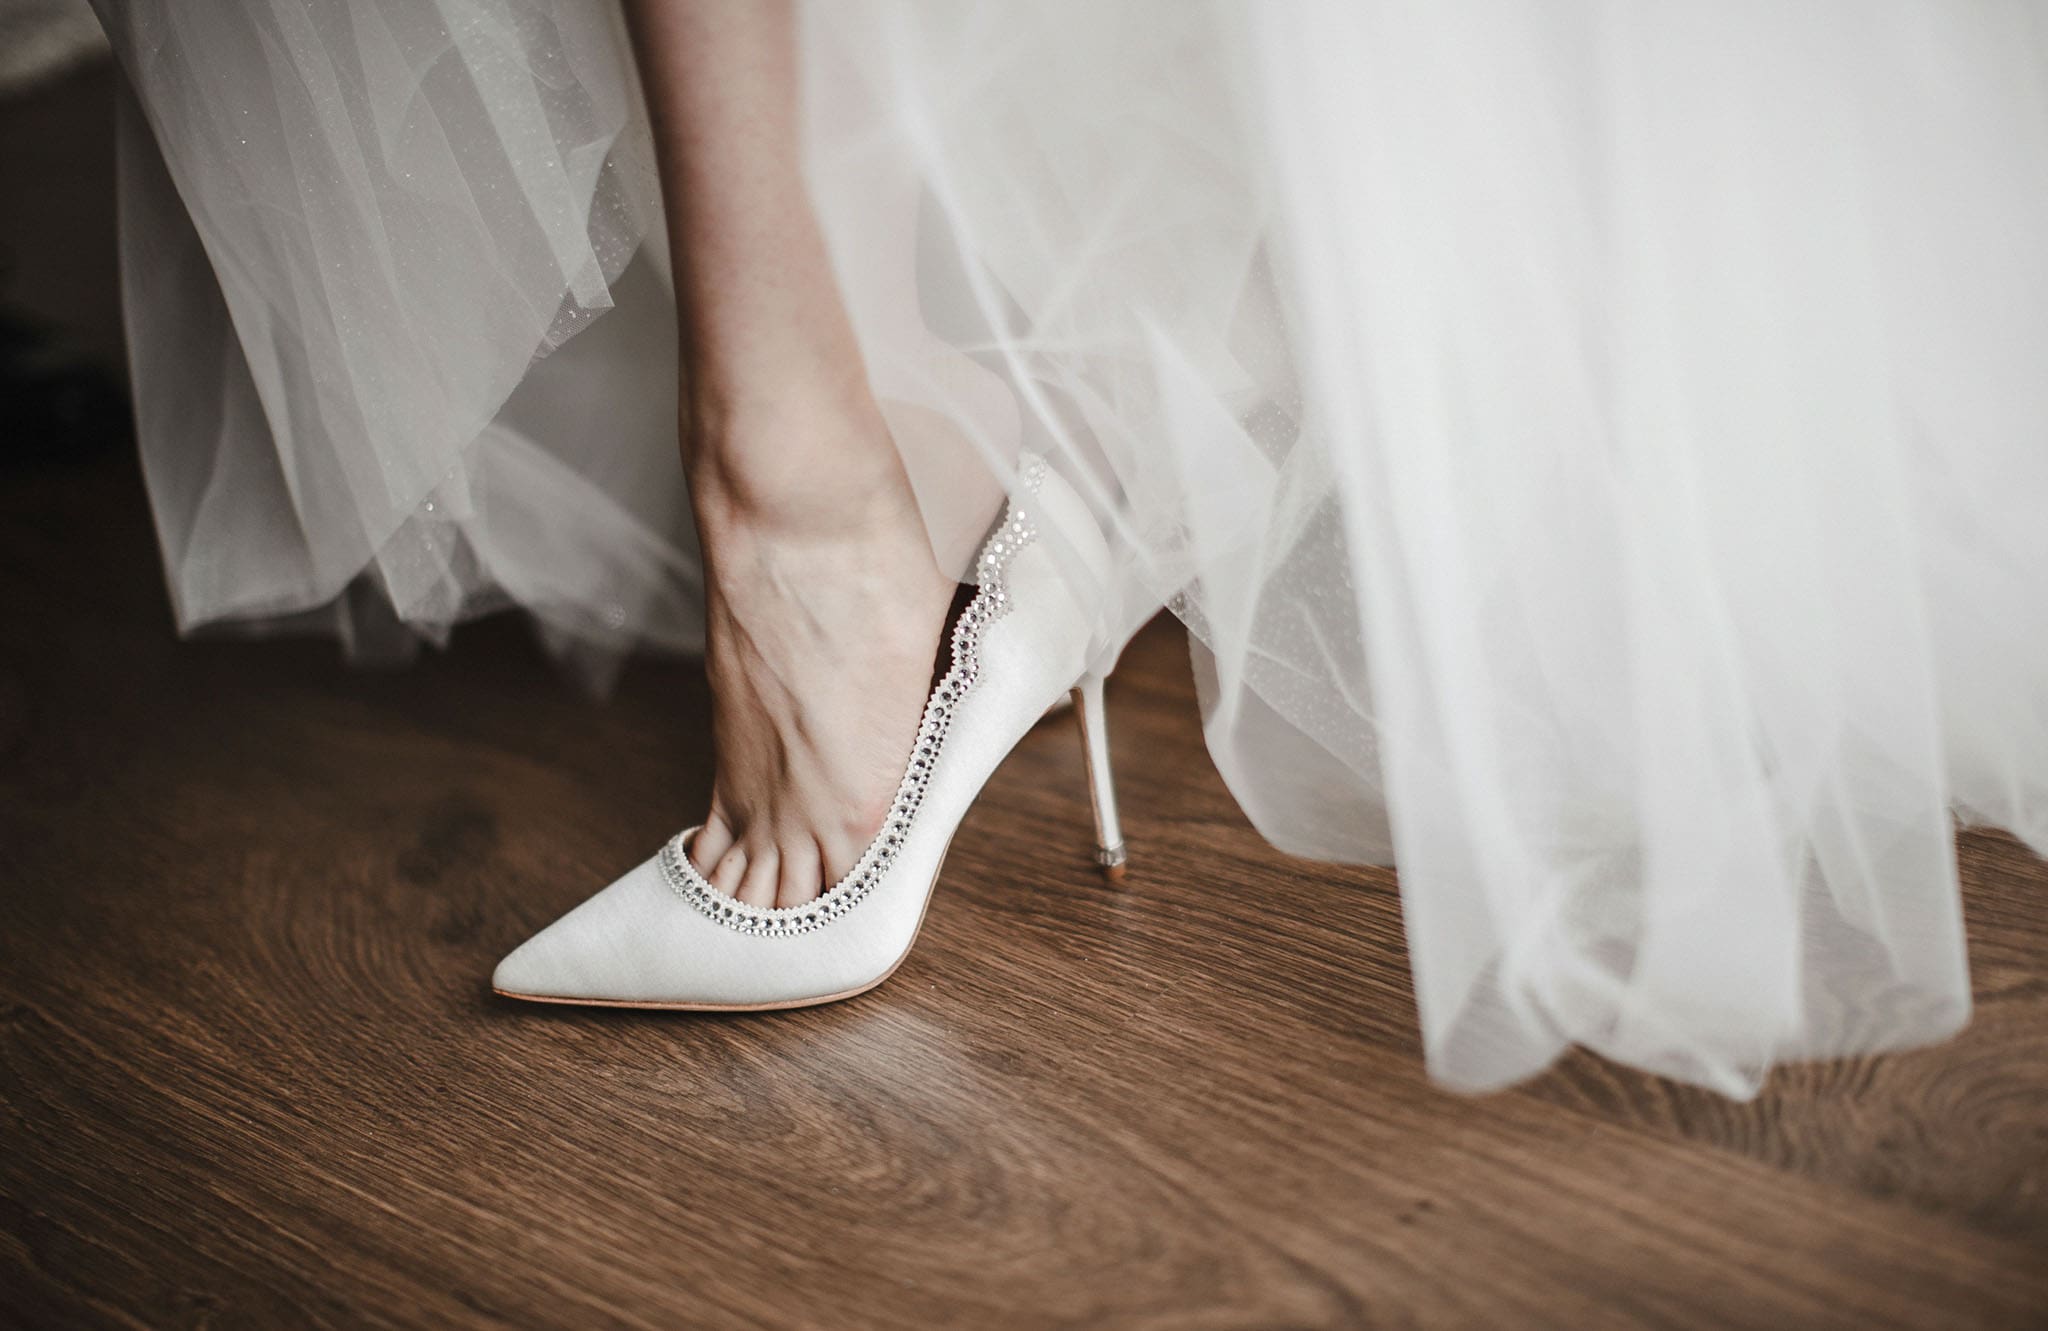 Choosing the perfect wedding shoe isn't an easy task